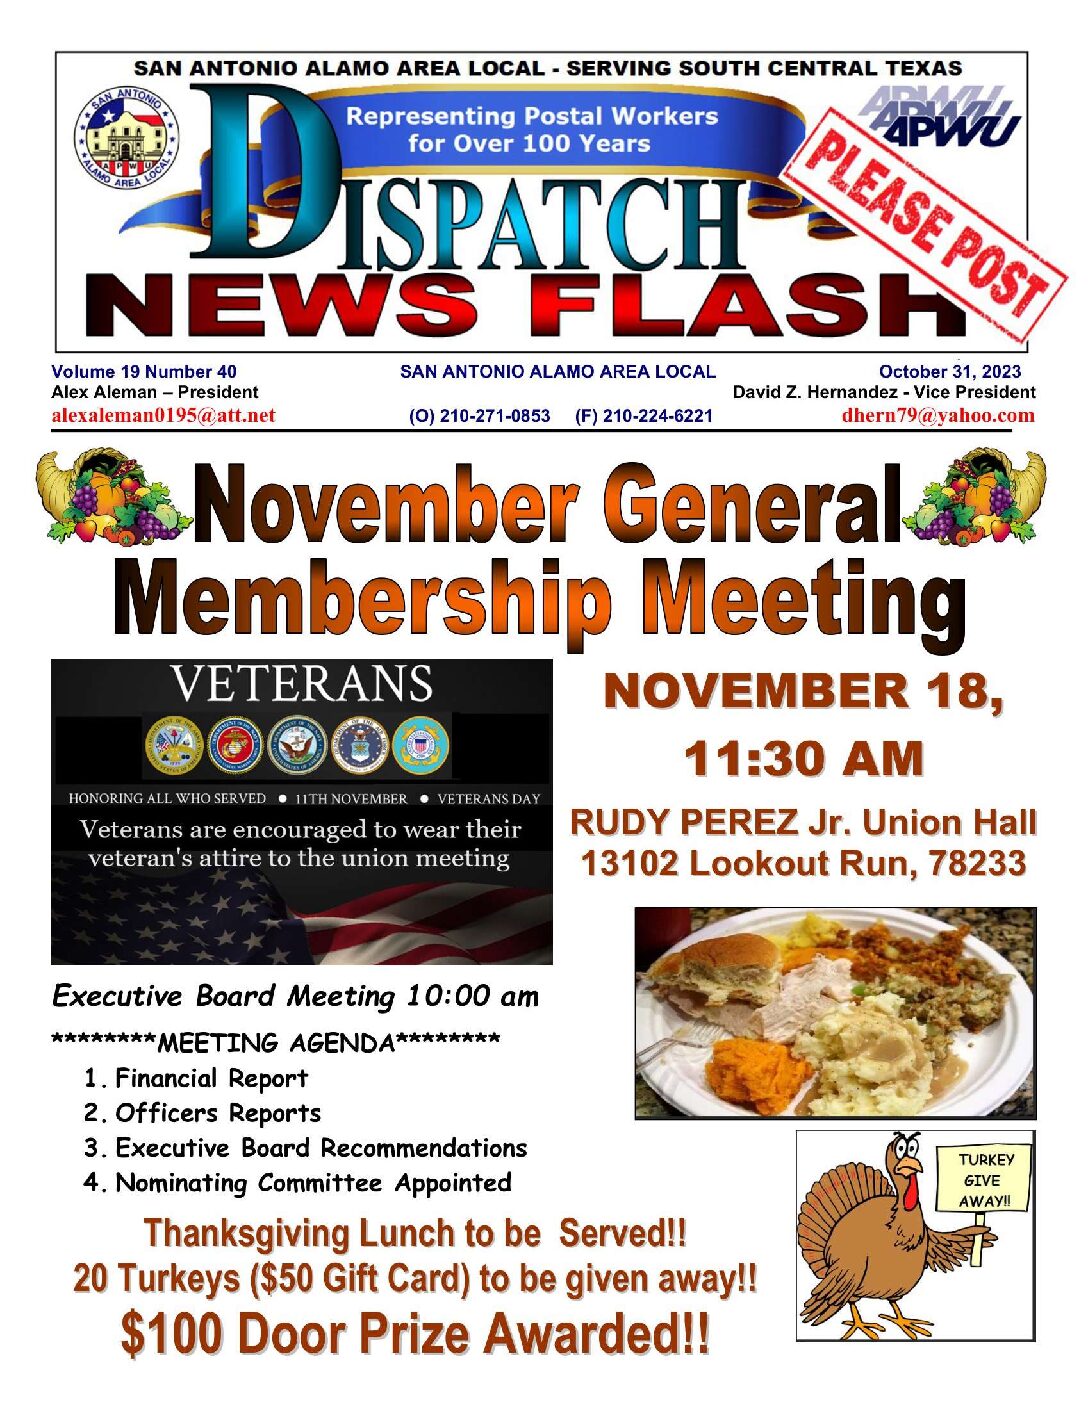 NewsFlash 19-40 November General Membership Meeting Notice - 